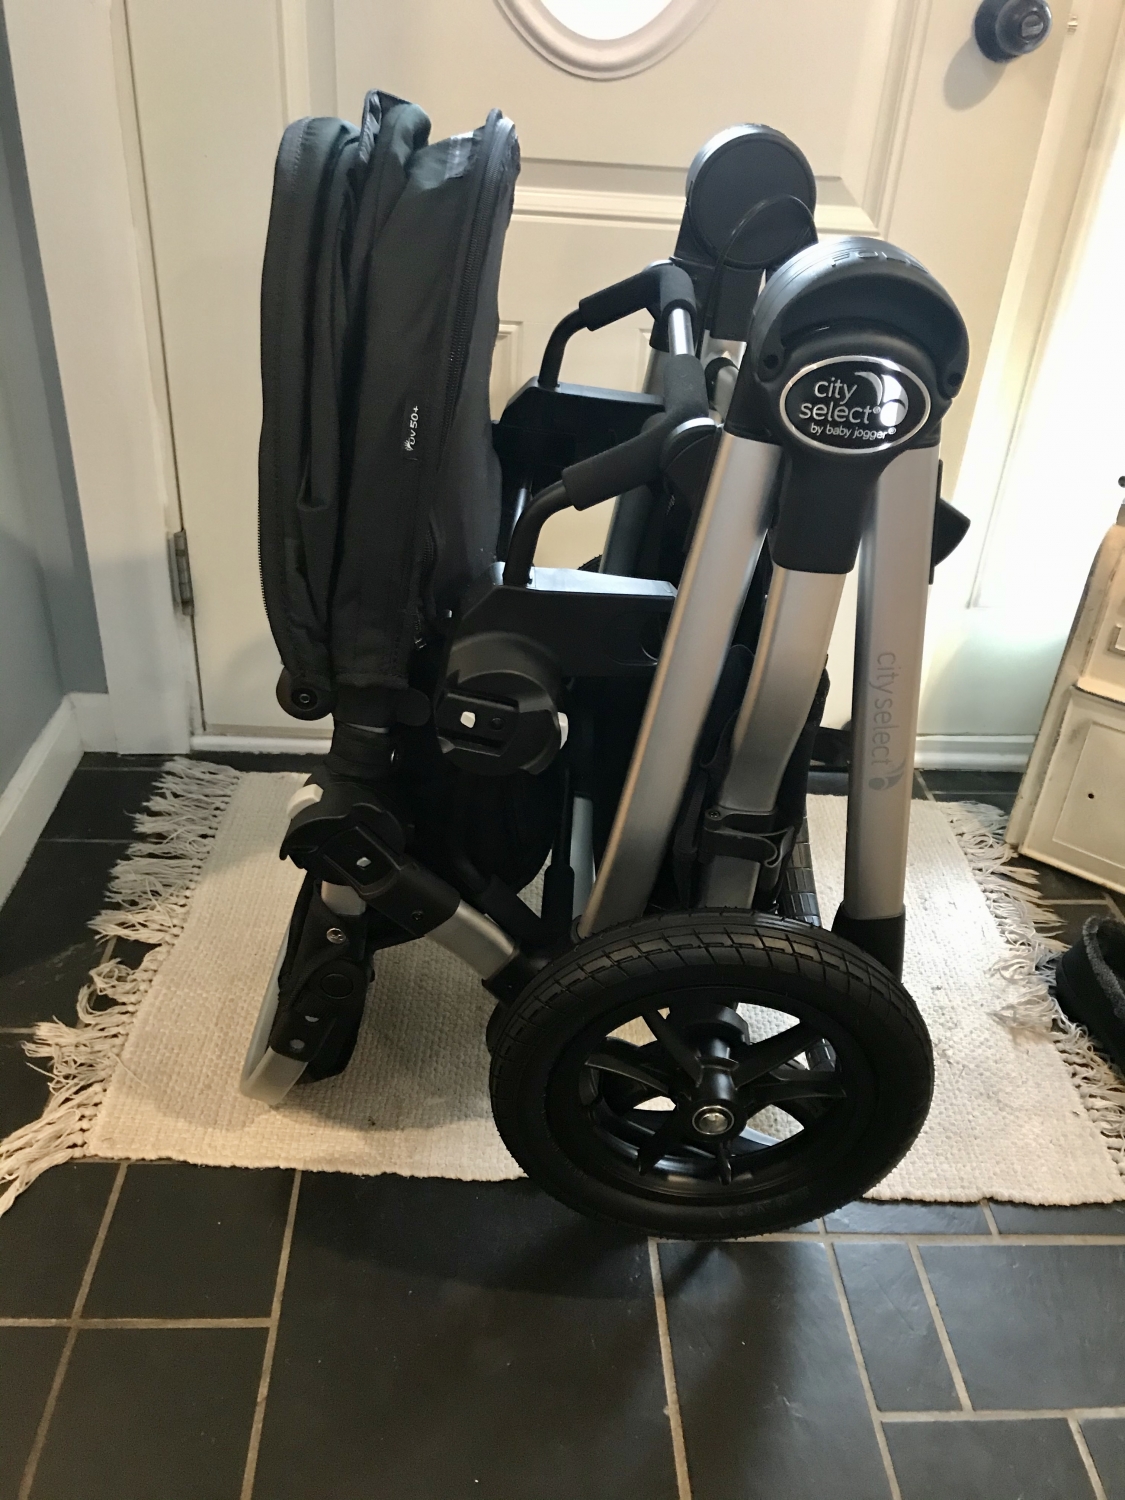 city select stroller wheels